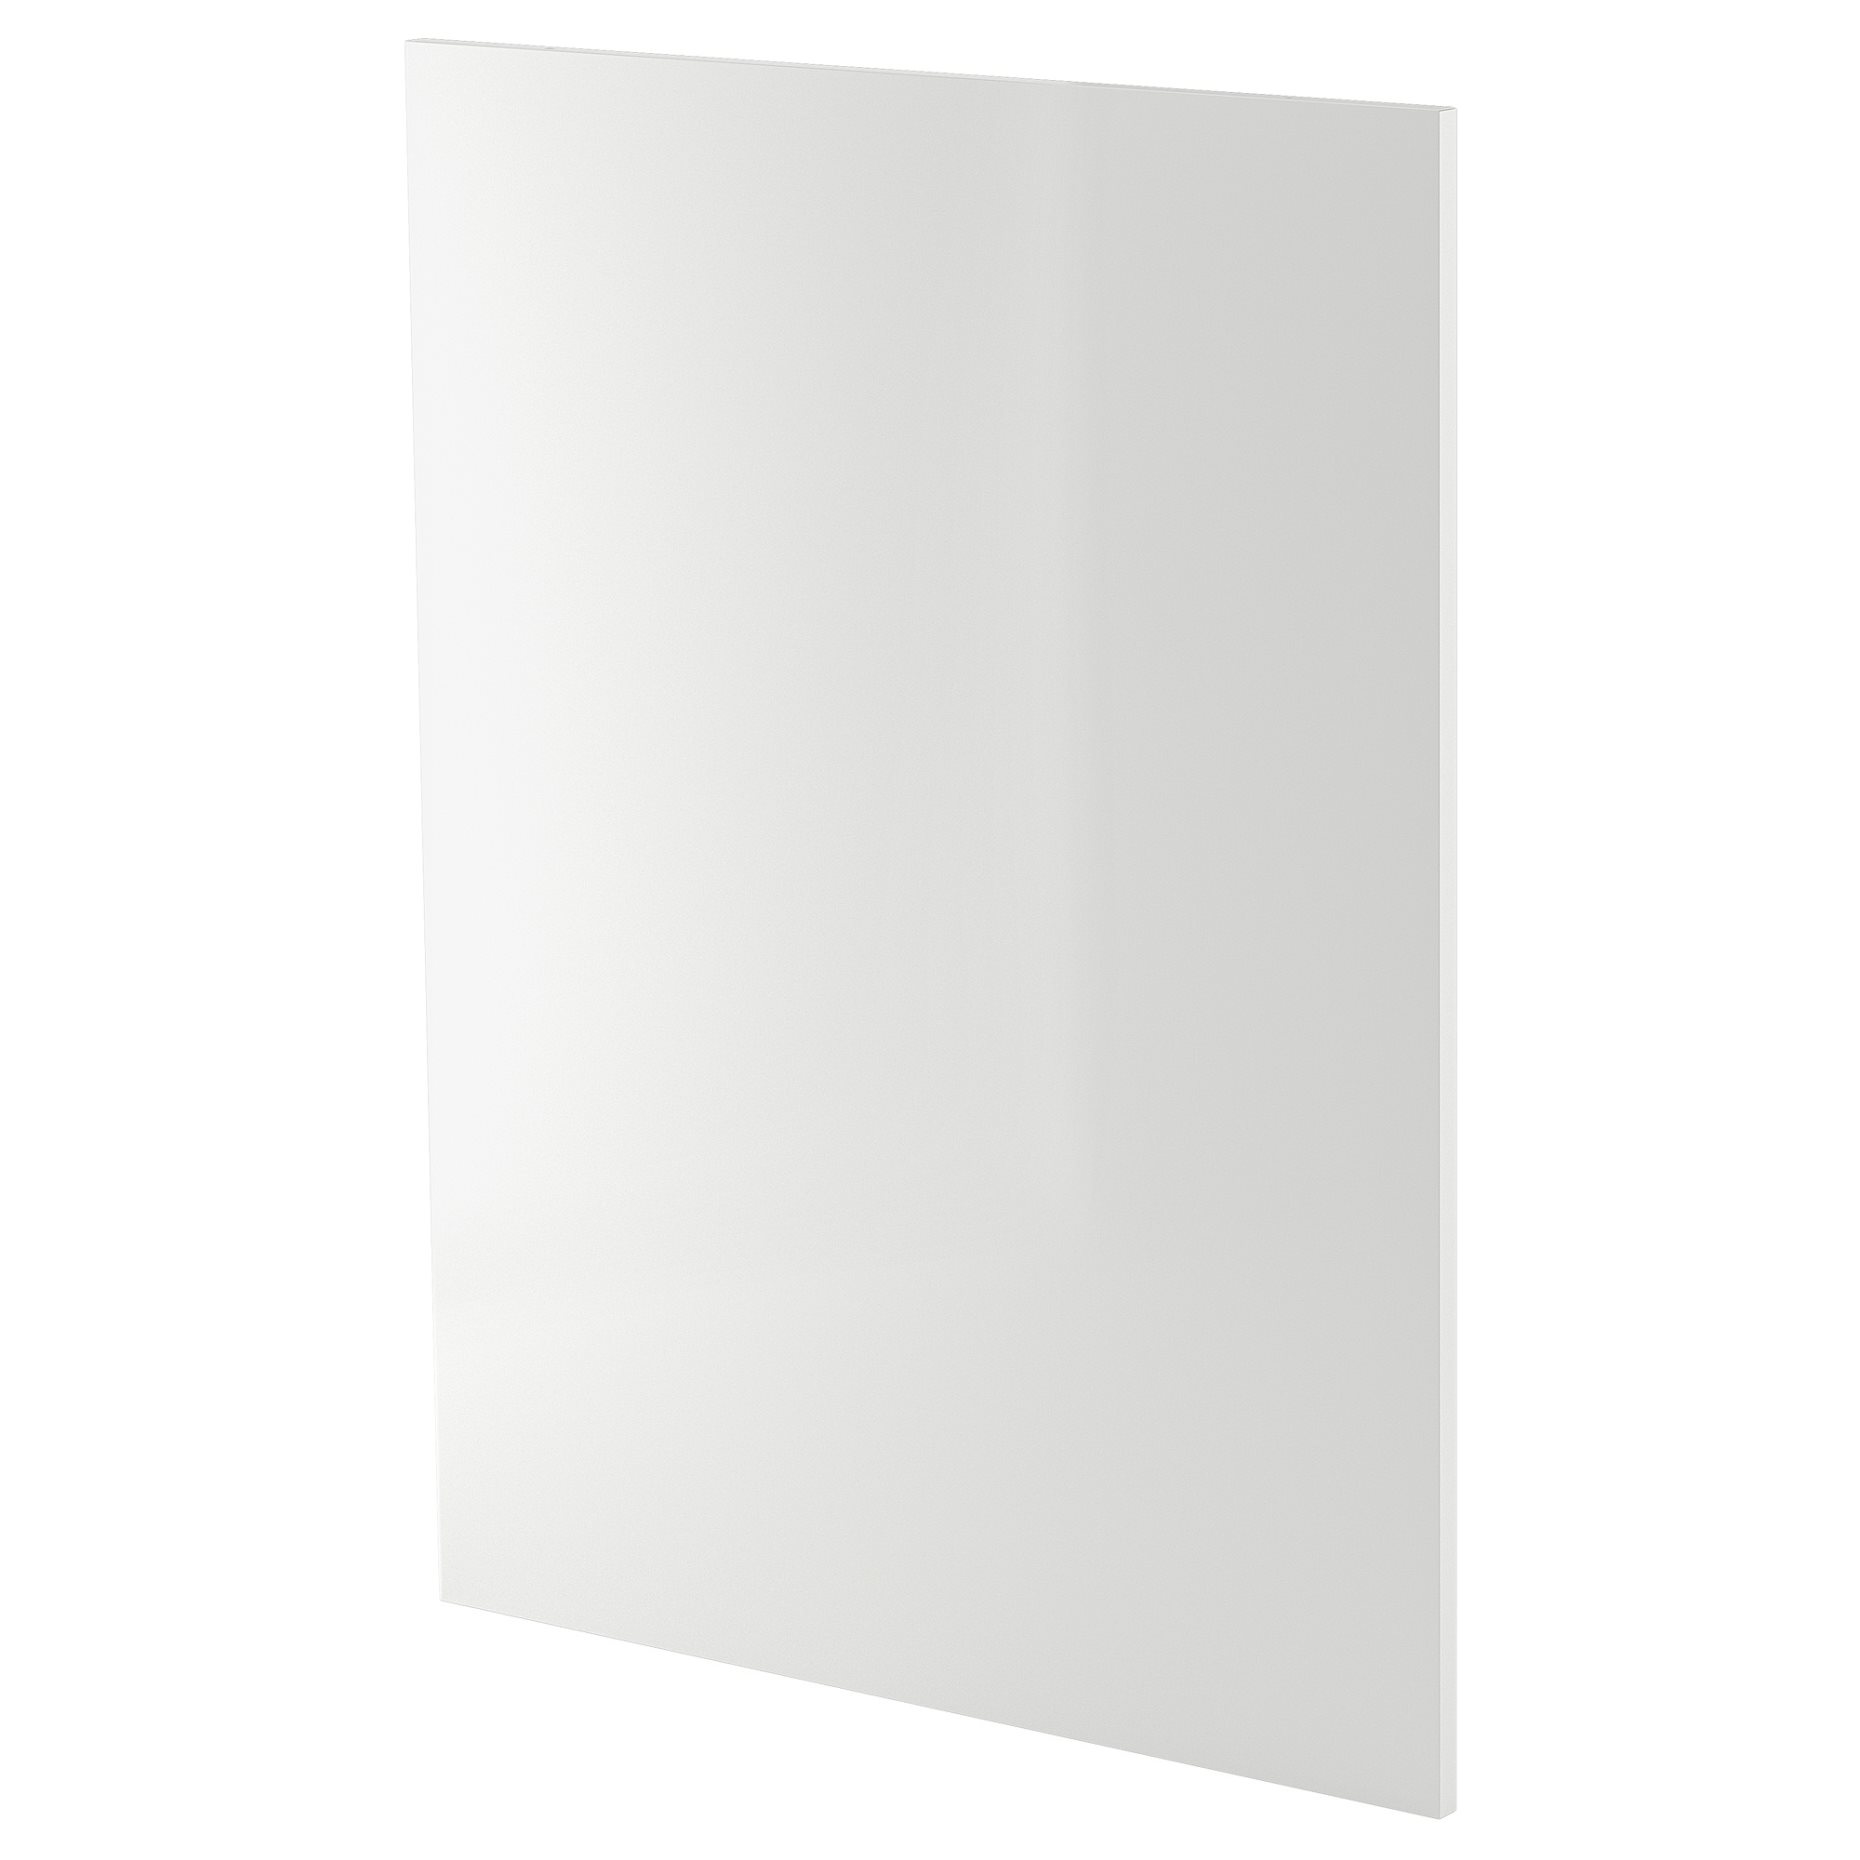 MITTZON, λευκός πίνακας/πίνακας ανακοινώσεων, 84x110x2 cm, 405.286.36